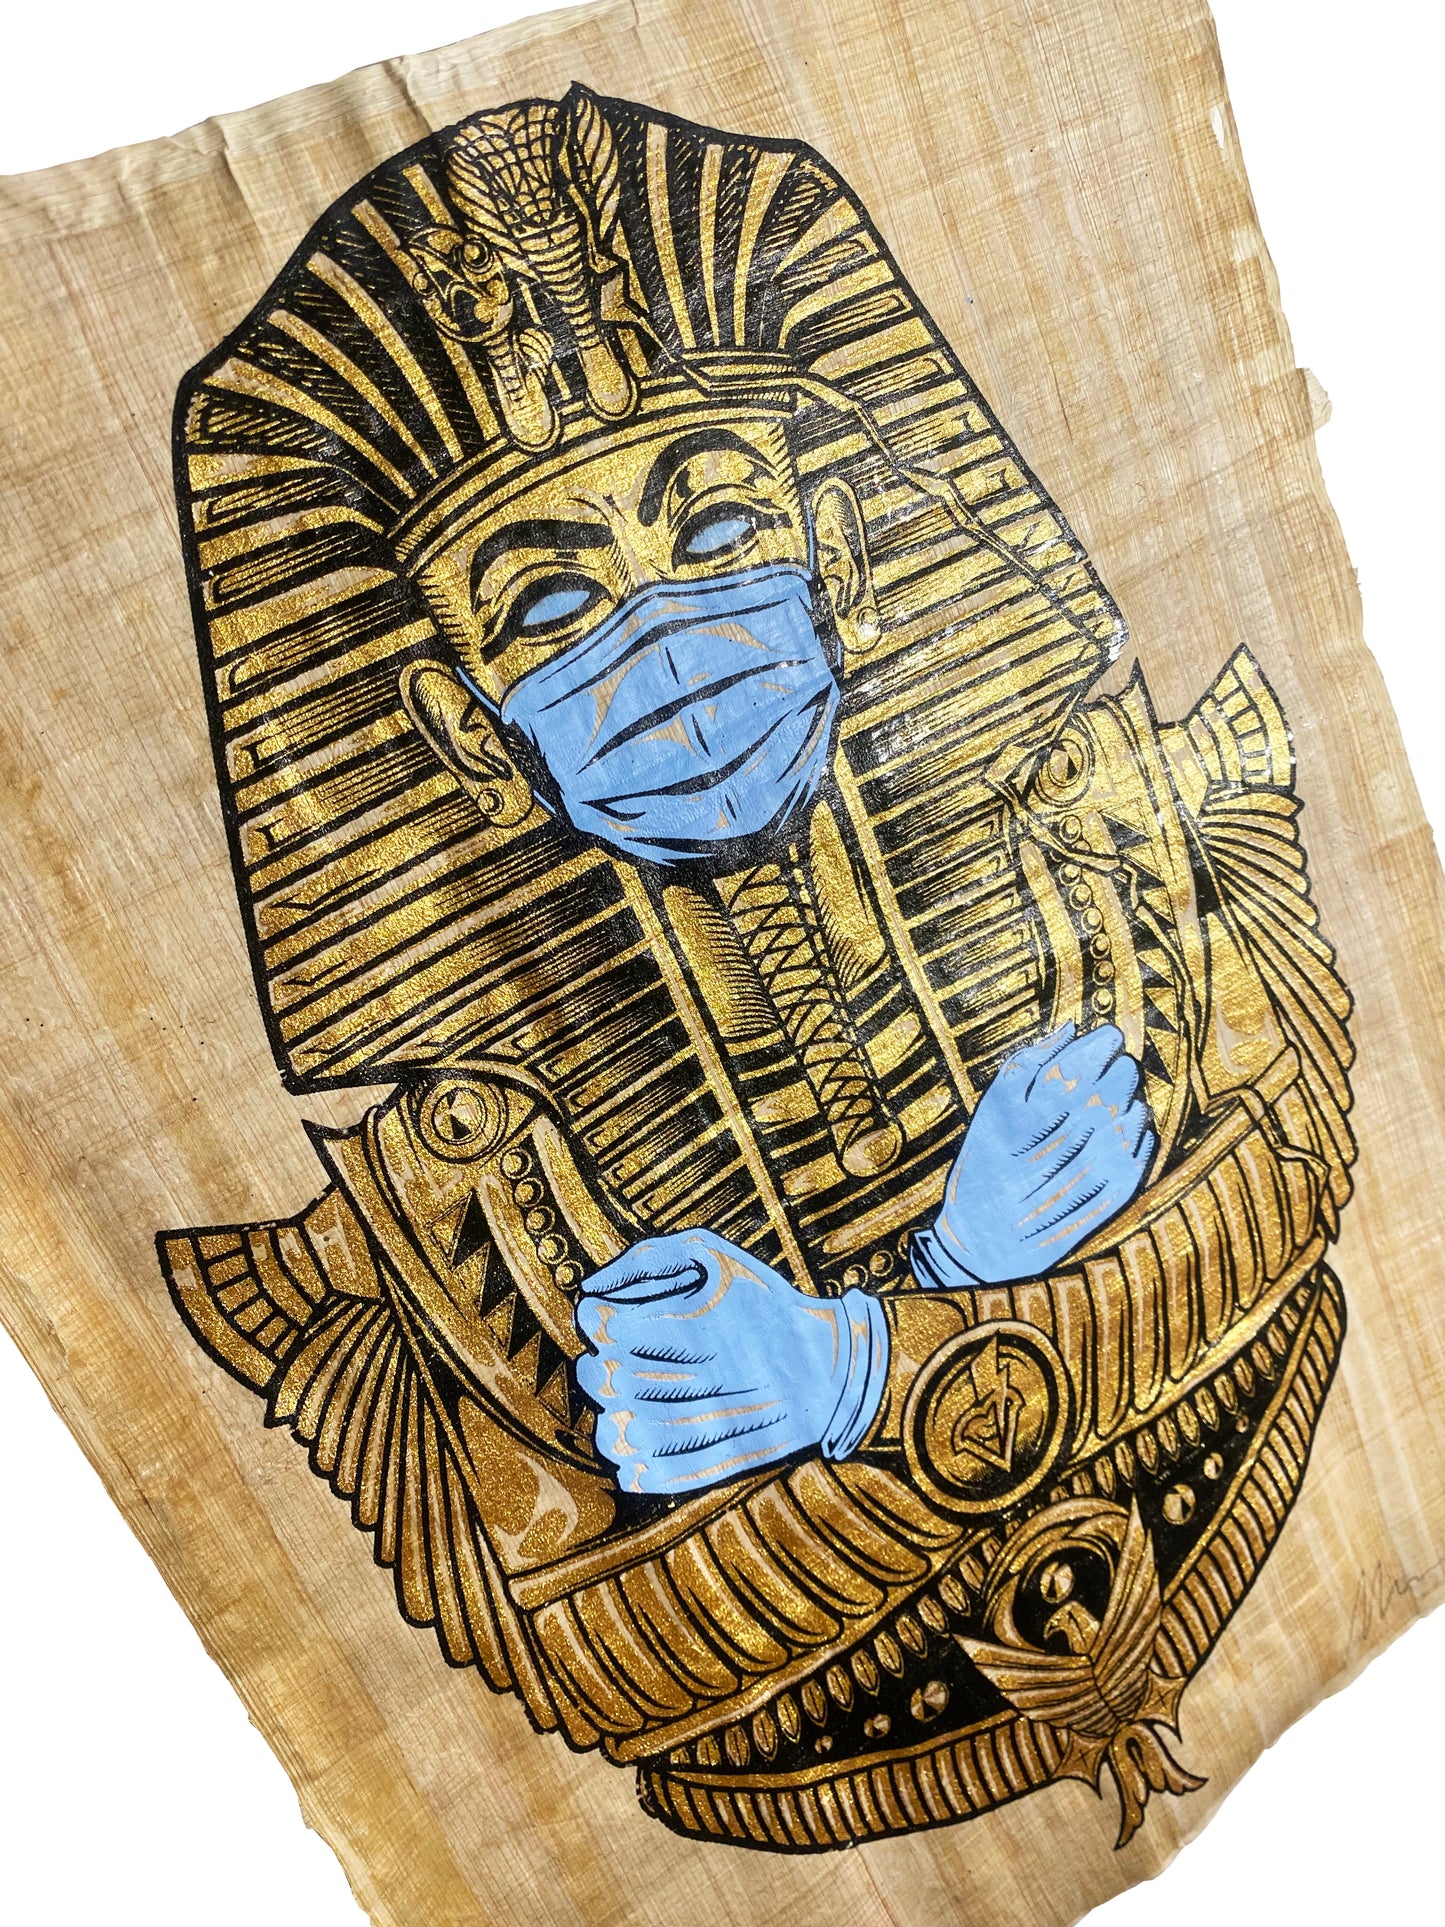 The Masked Pharaoh